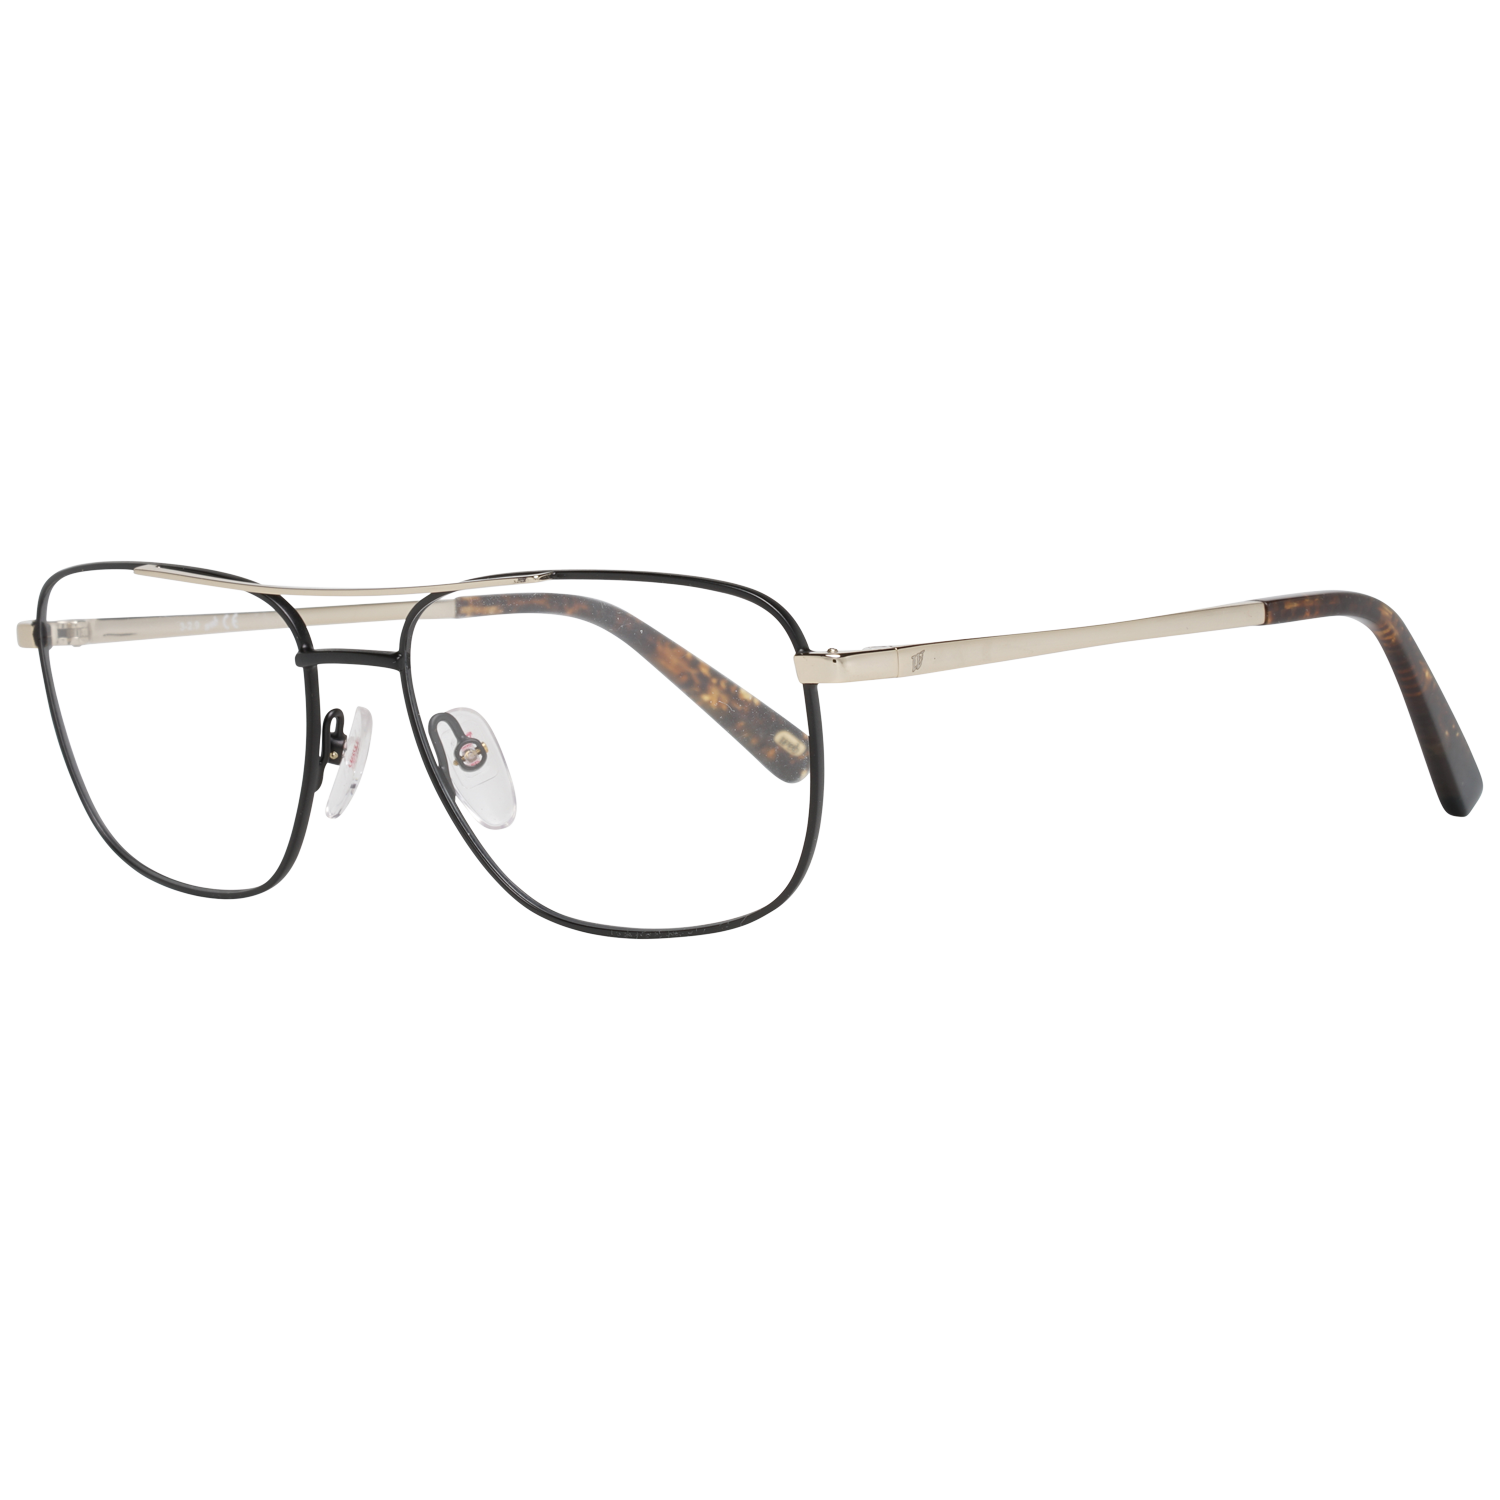 Web Frames Web Prescription Glasses Optical Frame WE5318 002 55 Eyeglasses Eyewear UK USA Australia 